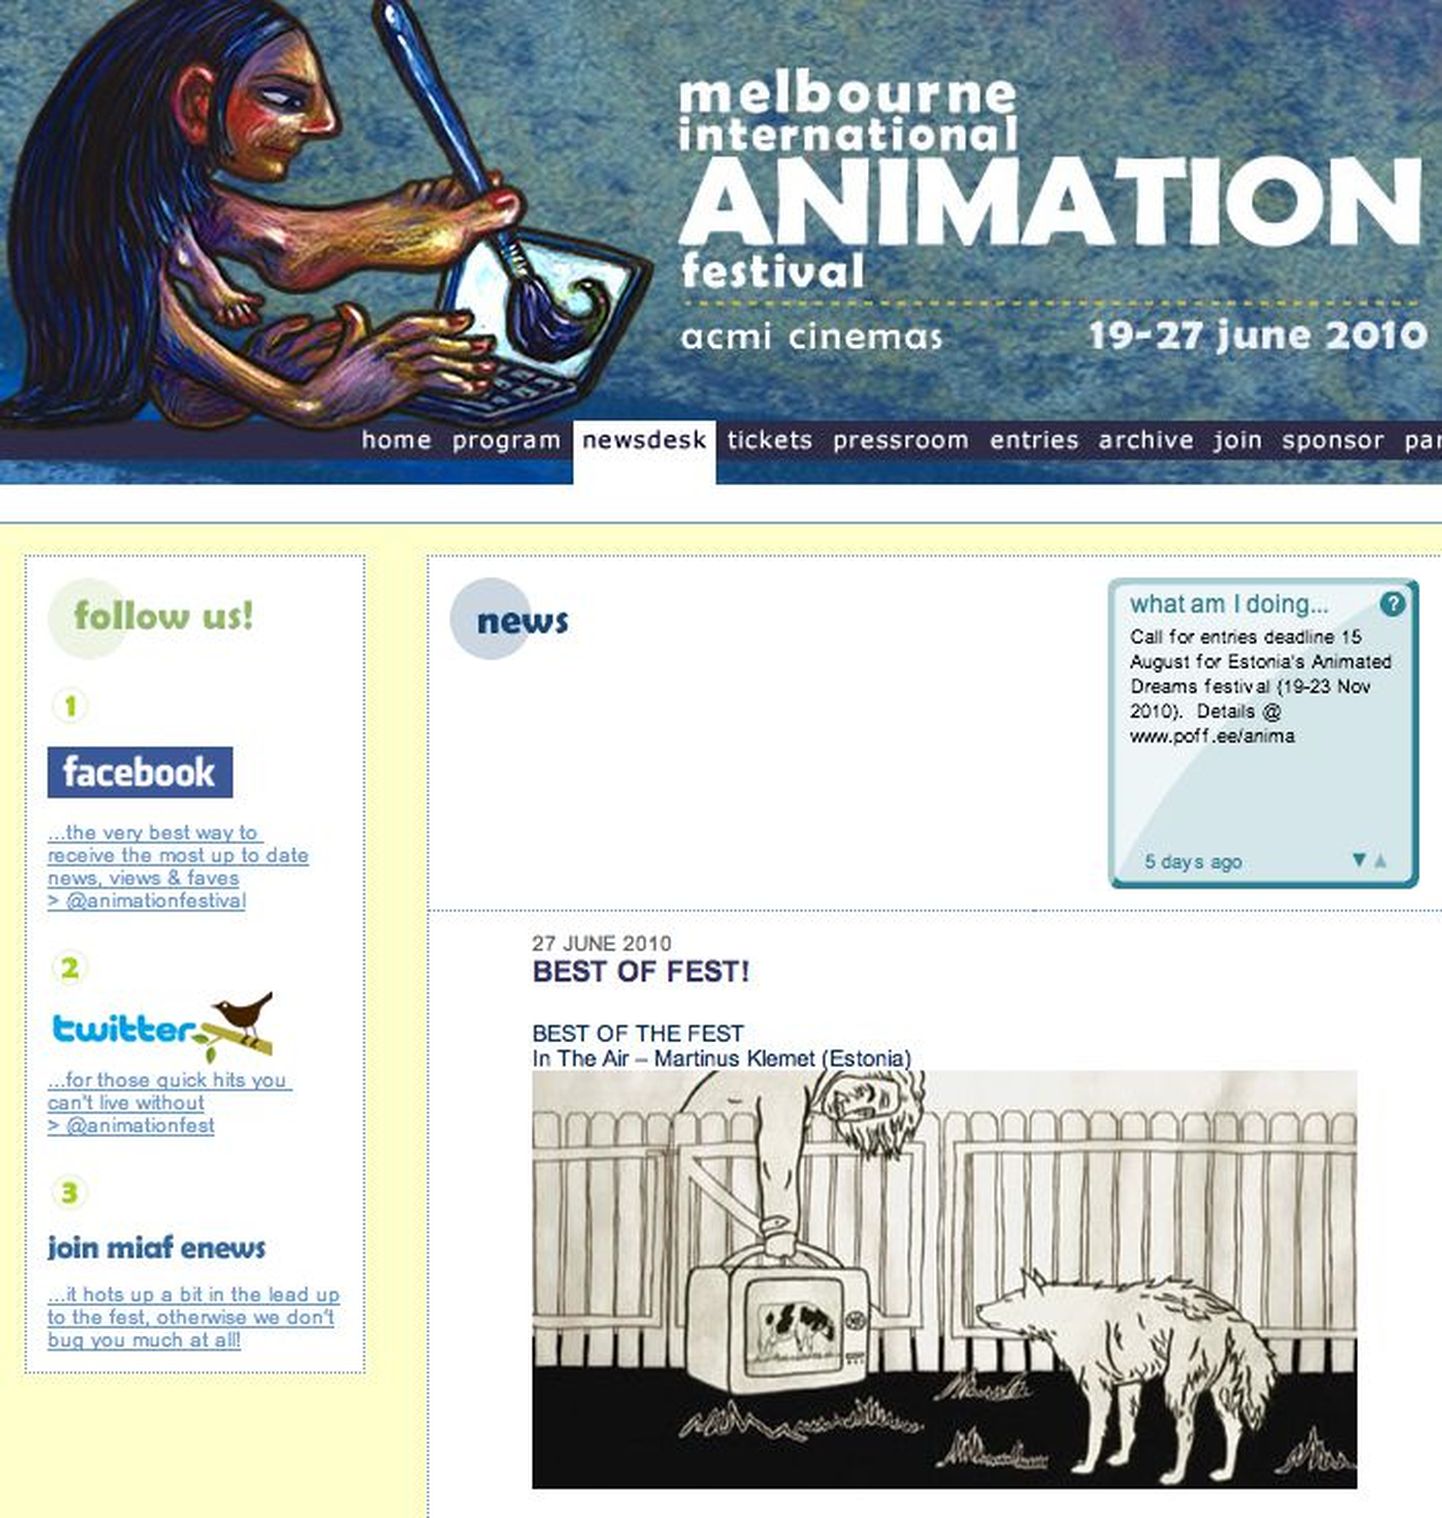 Melbourne'i animafilmide festivali koduleht.